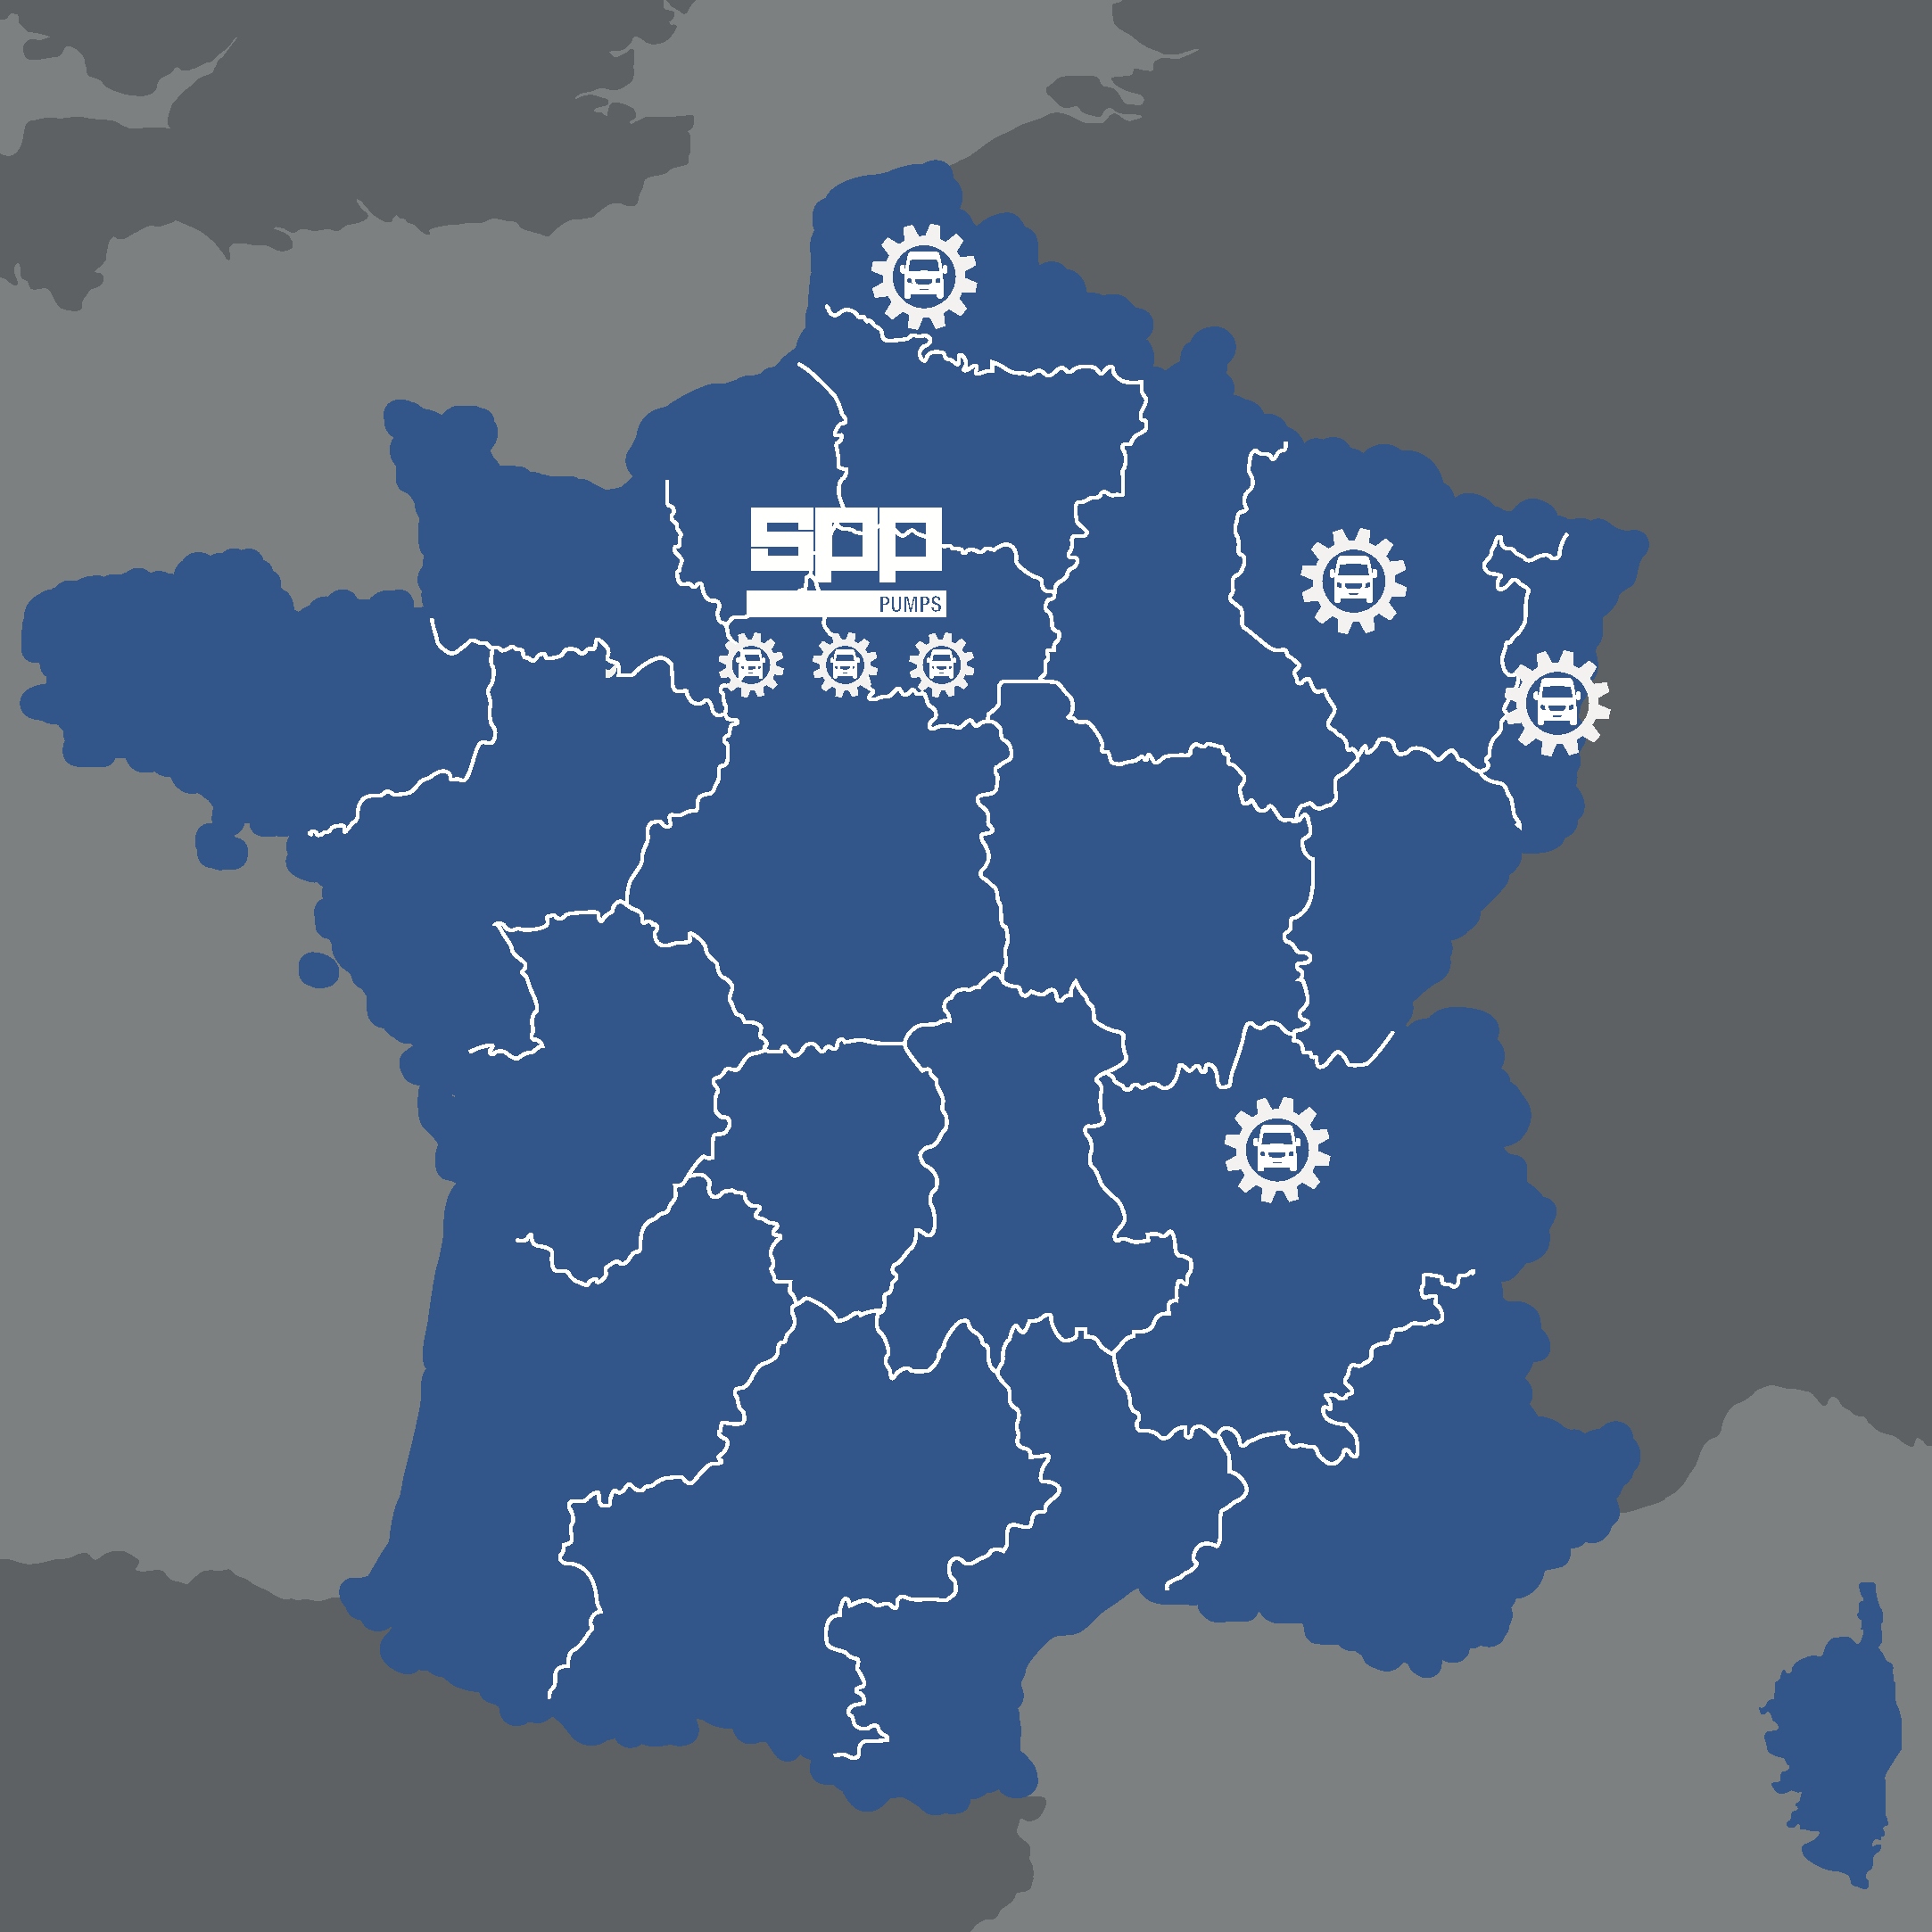 SPP Map of France